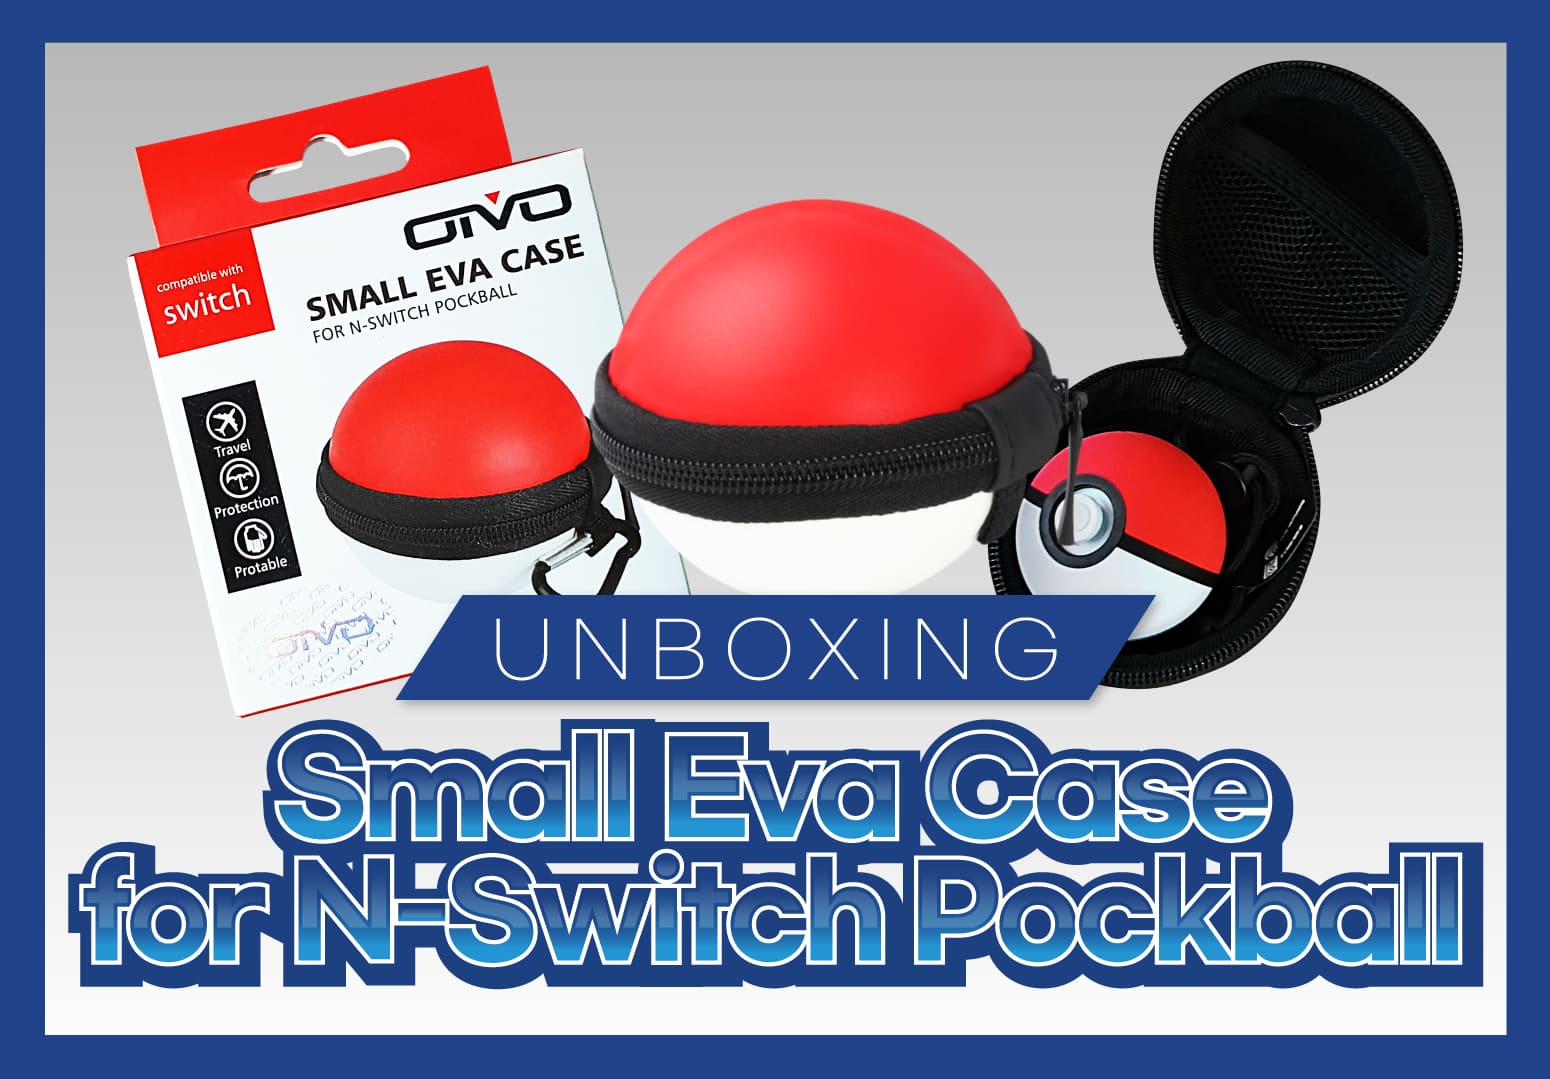 Small Eva Case for N-Switch Pockball 썸네일